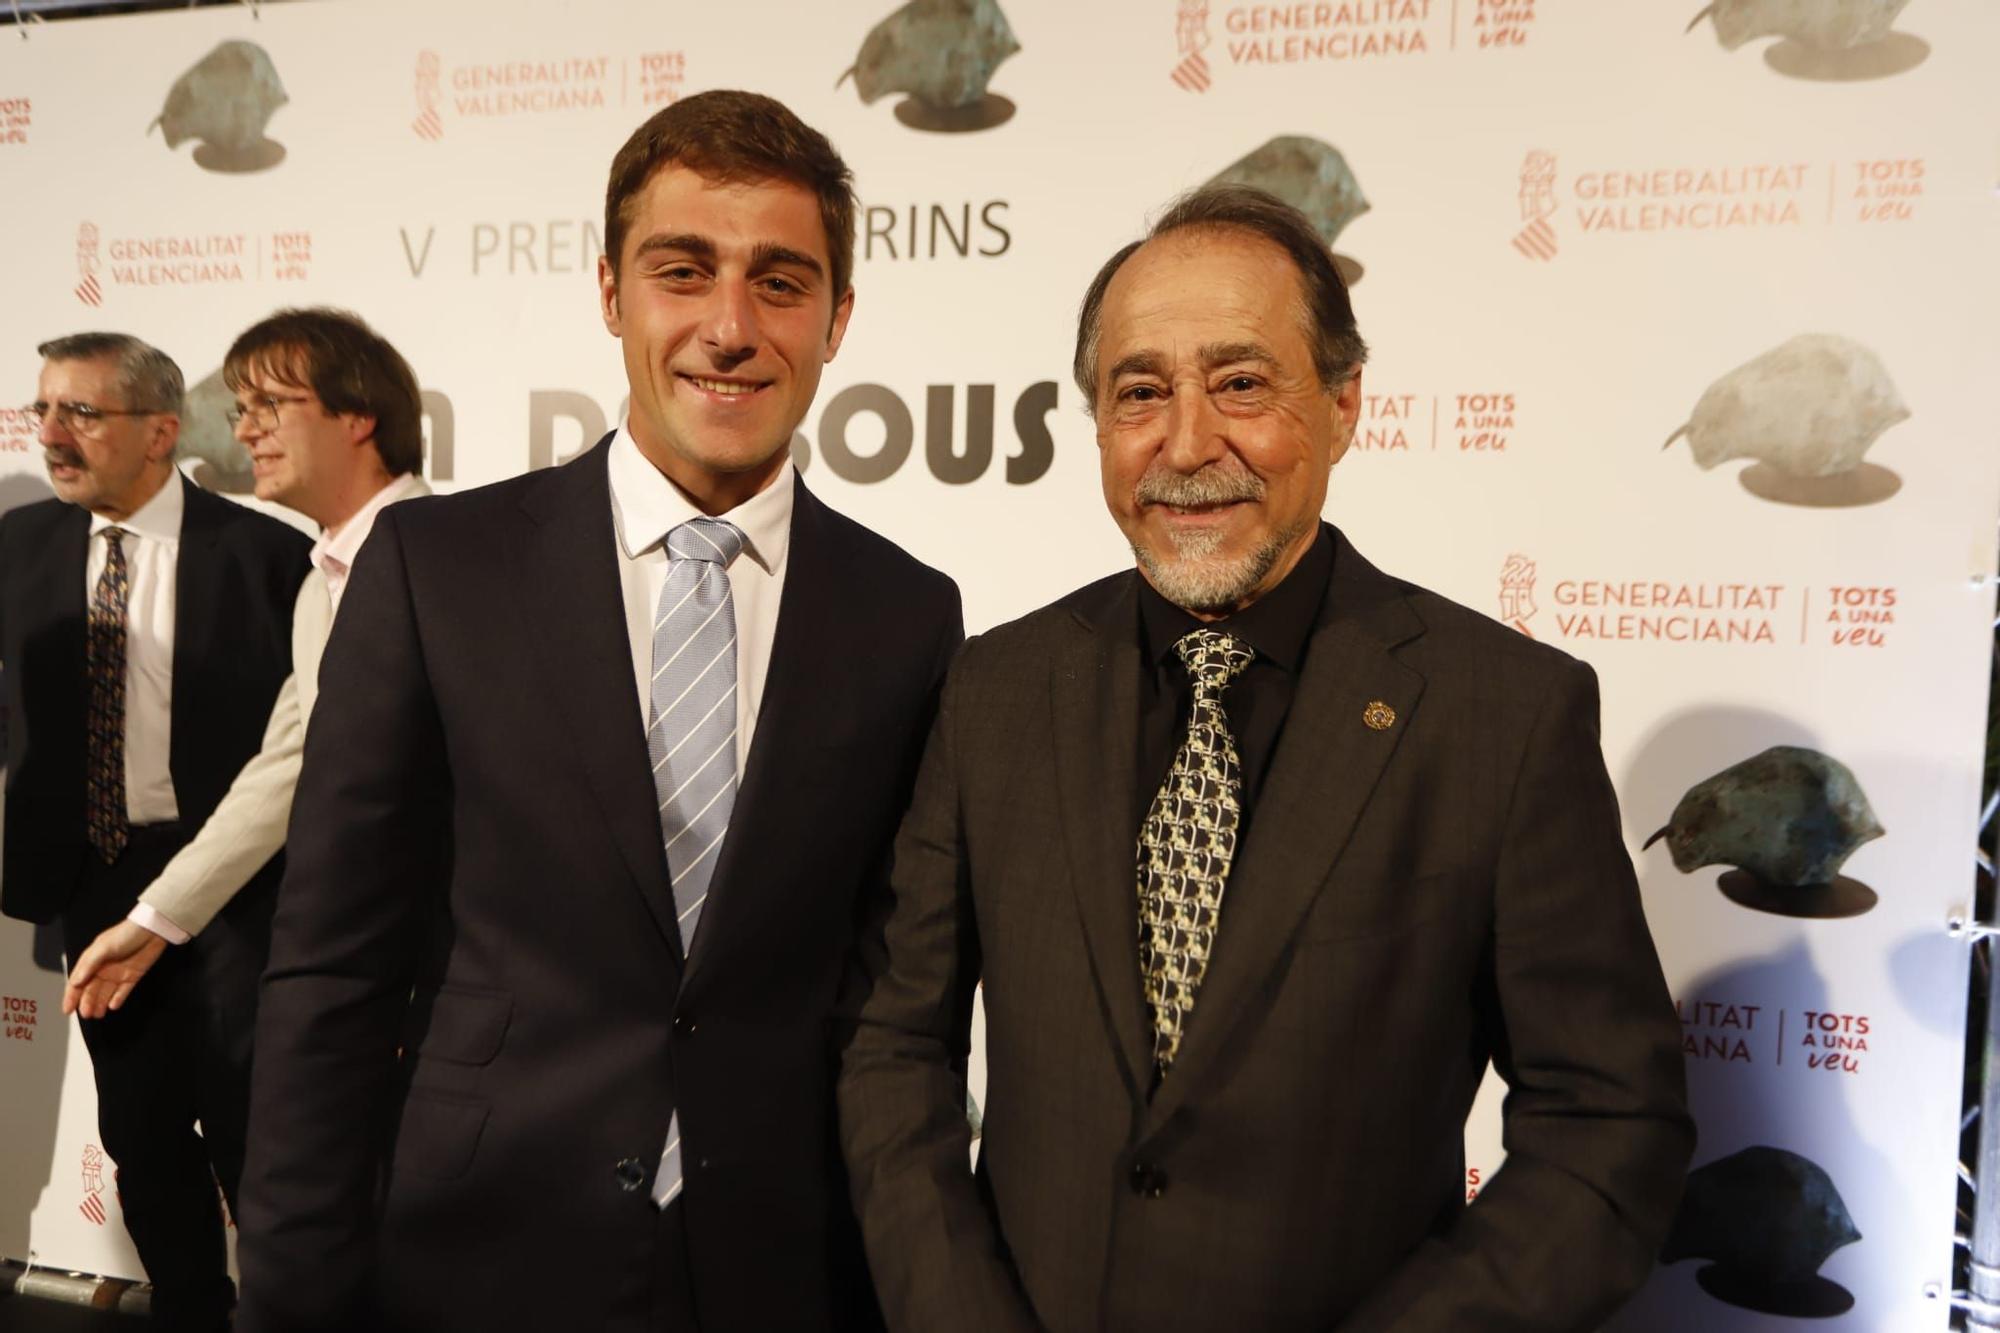 Entrega de los V Premios Taurinos “Va de bous” de la Generalitat